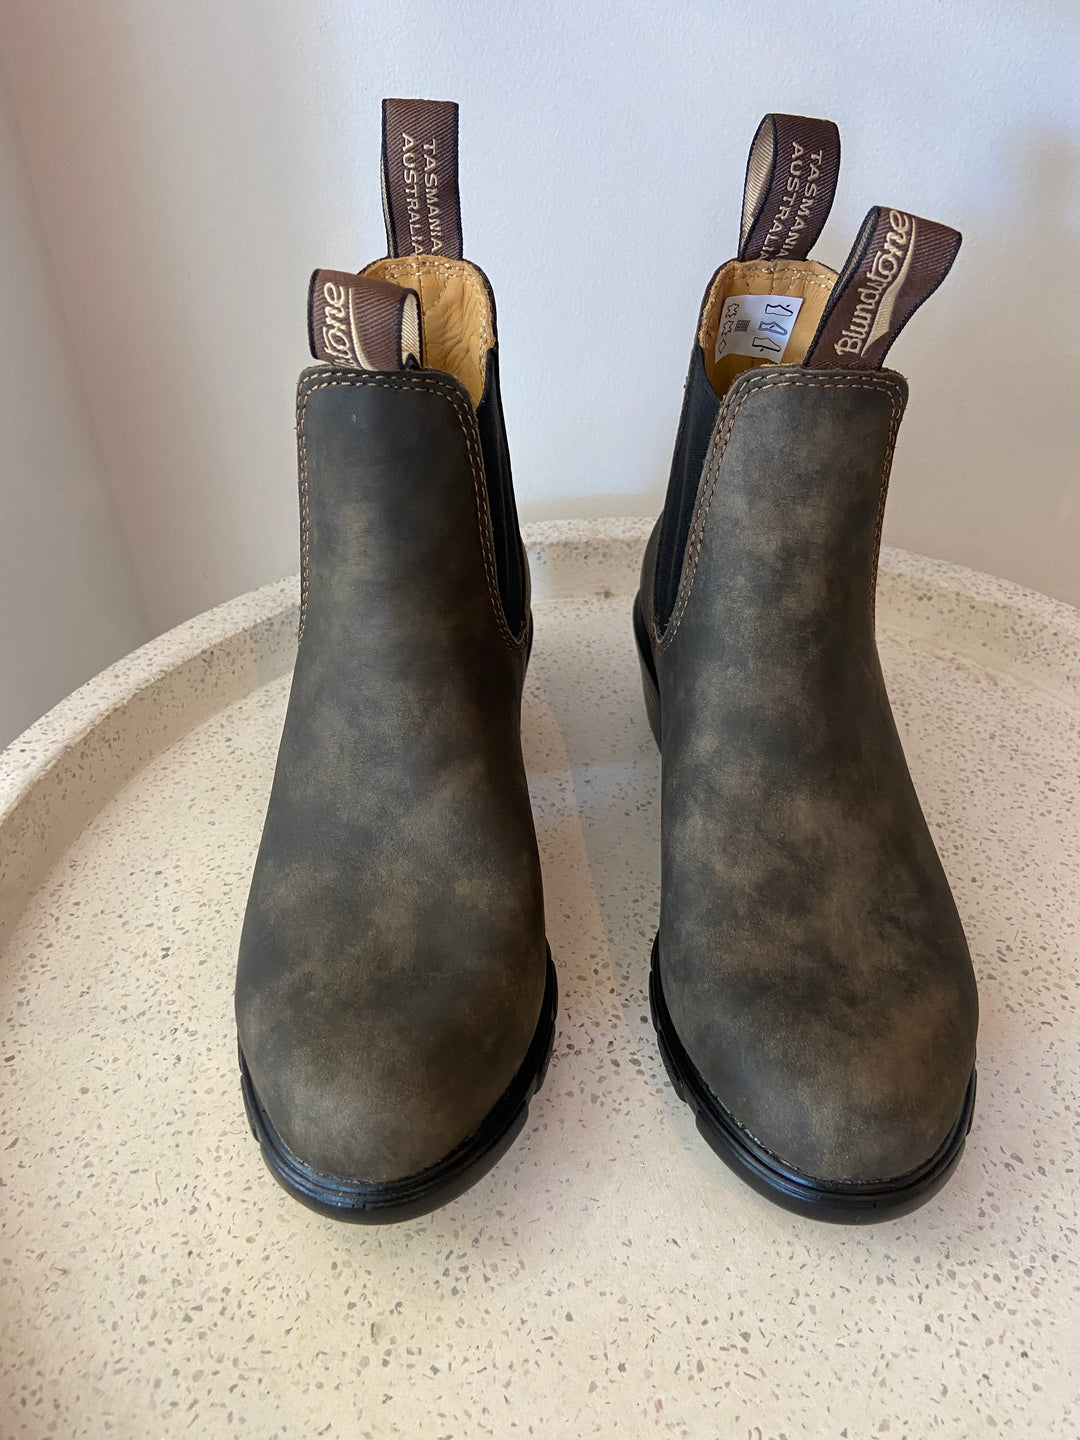 blundstone 1677 Heeled Boot - Rustic Brown